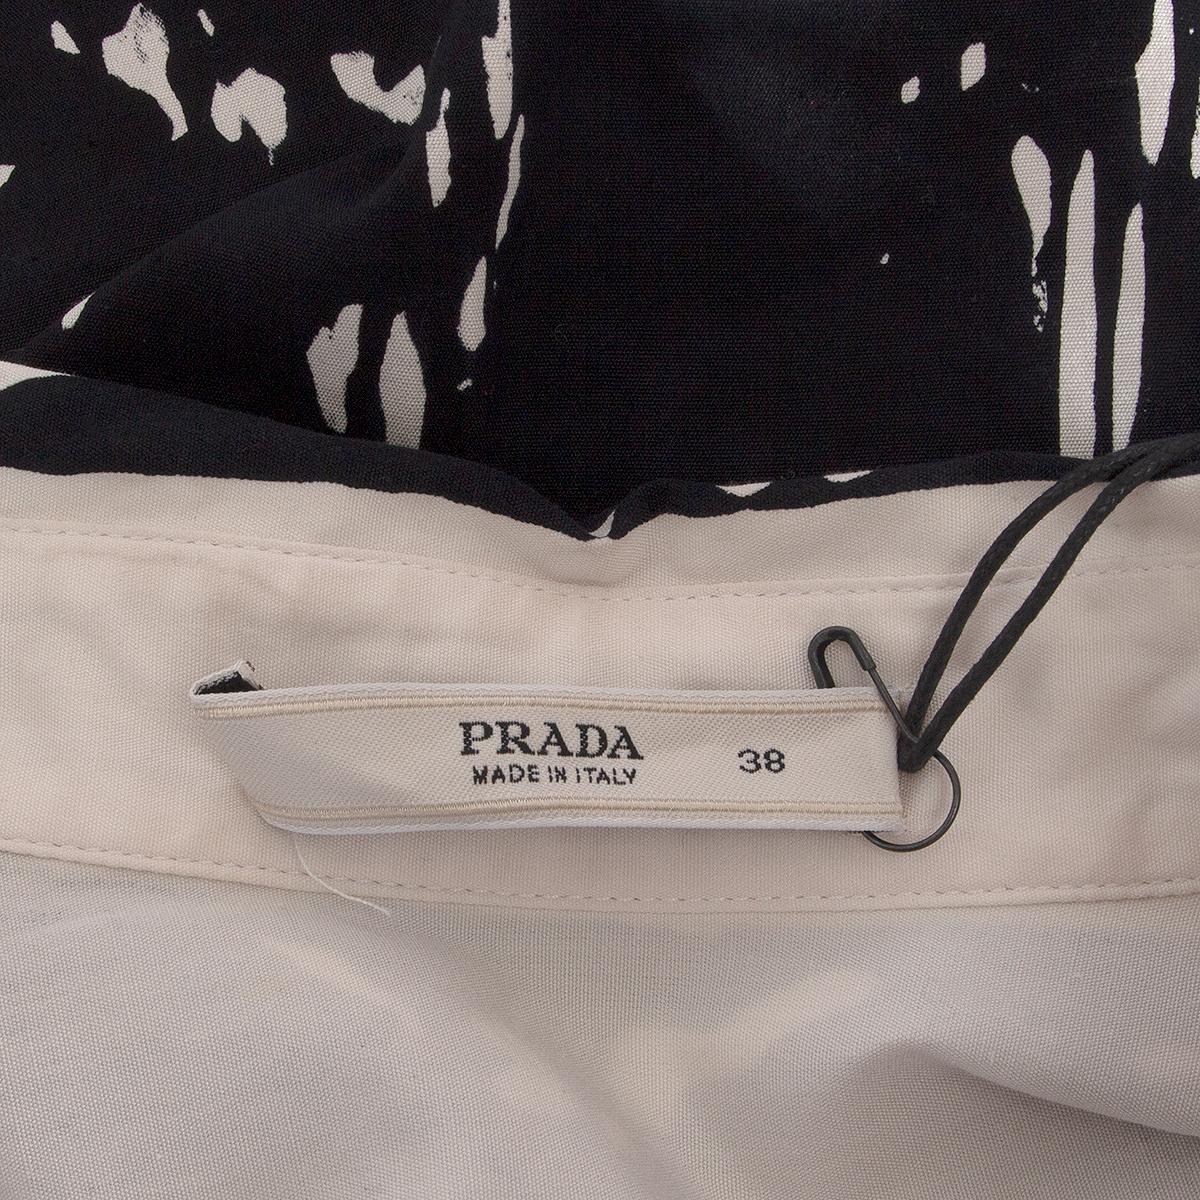 Black PRADA black white blue cotton ABSTRACT PRINT Button Up Shirt 38 XS